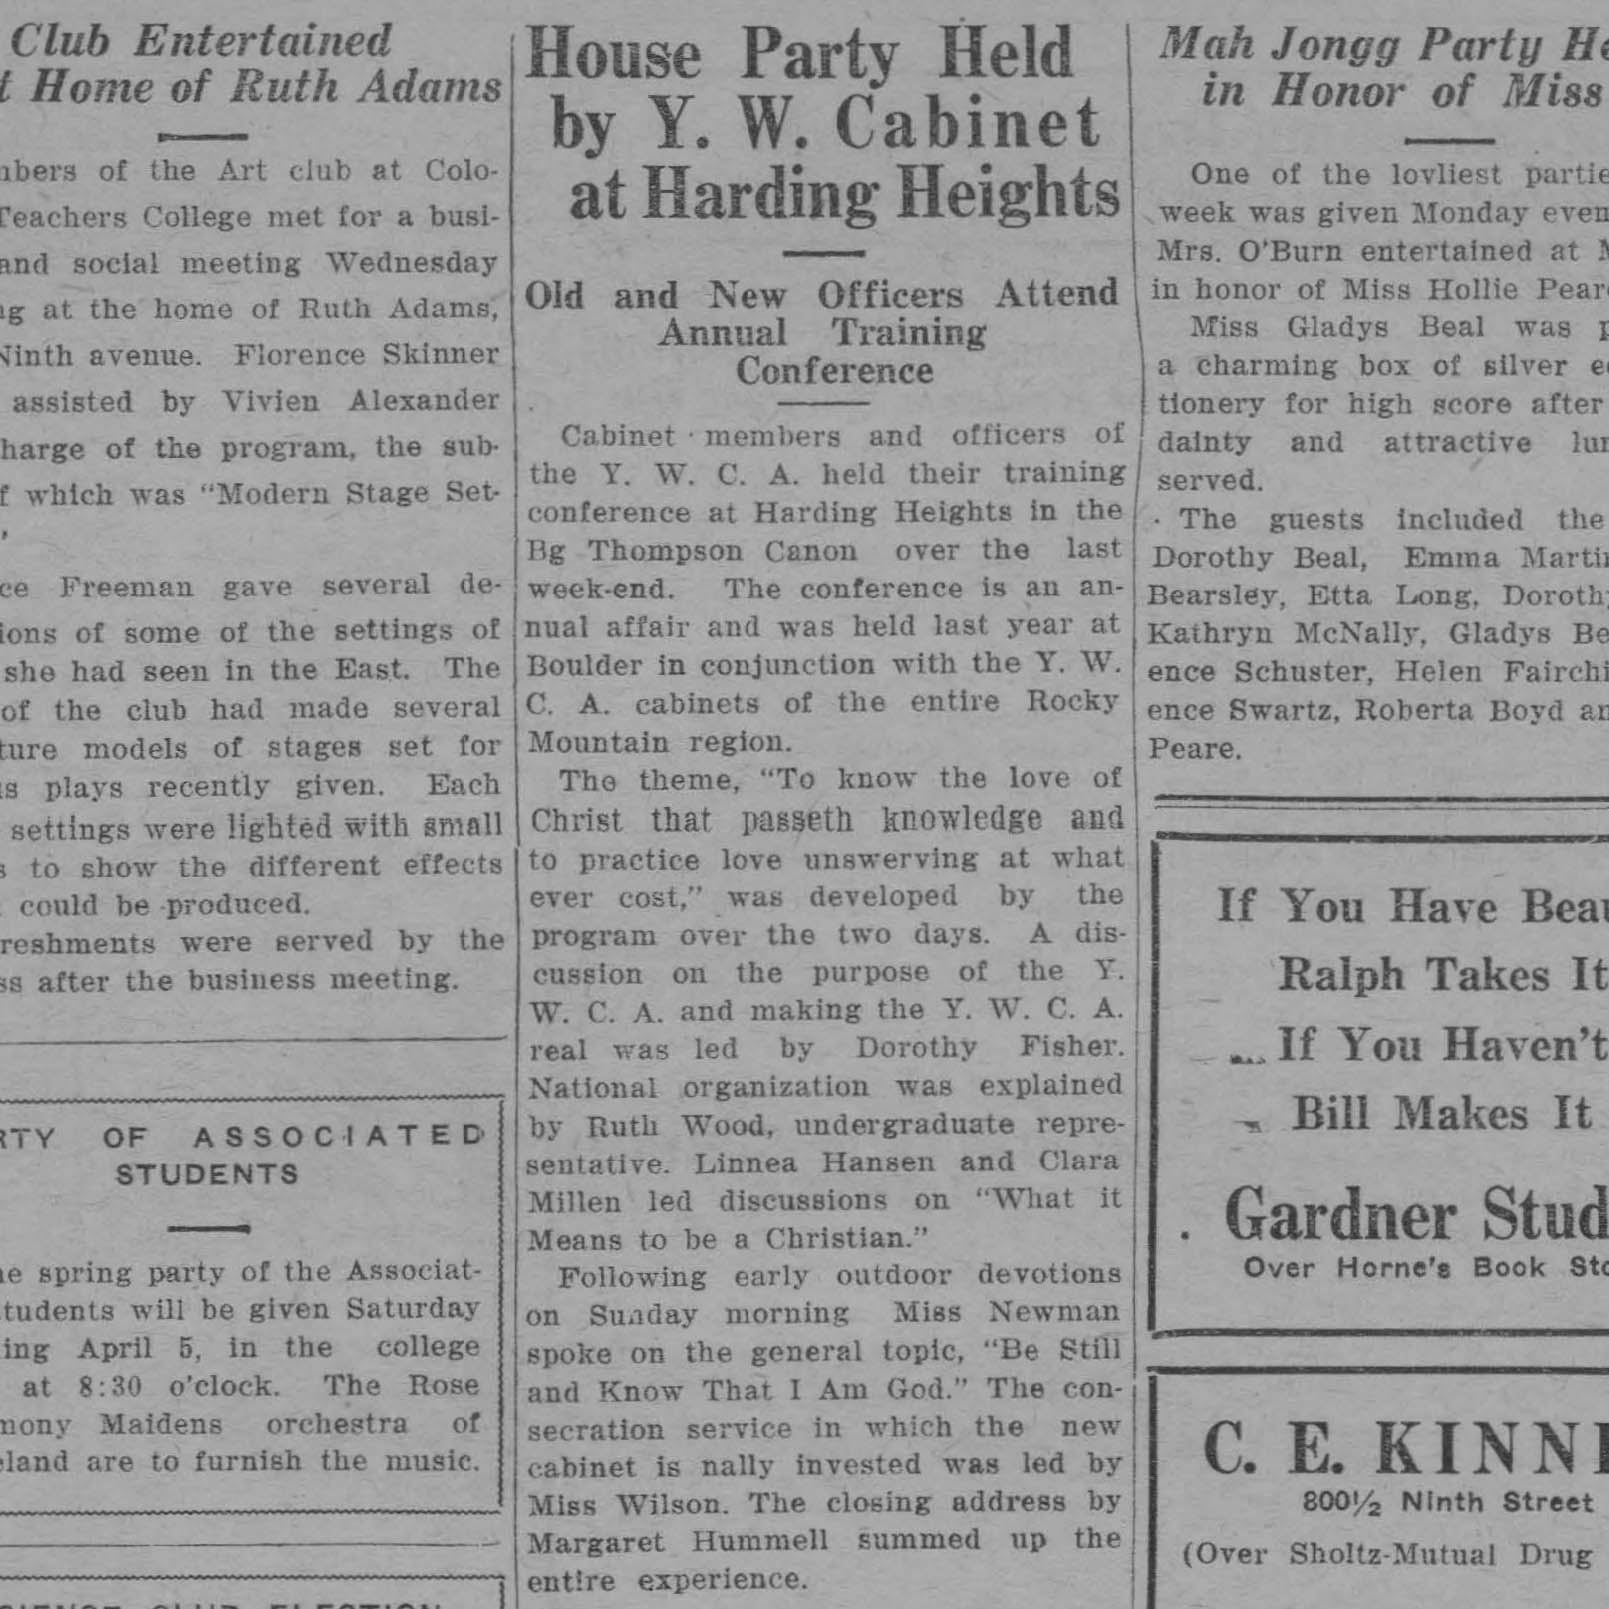 Idlewild Lodge - idlewildlodge.github.io - 1924-04-03 - The Mirror - House Party at Harding Heights